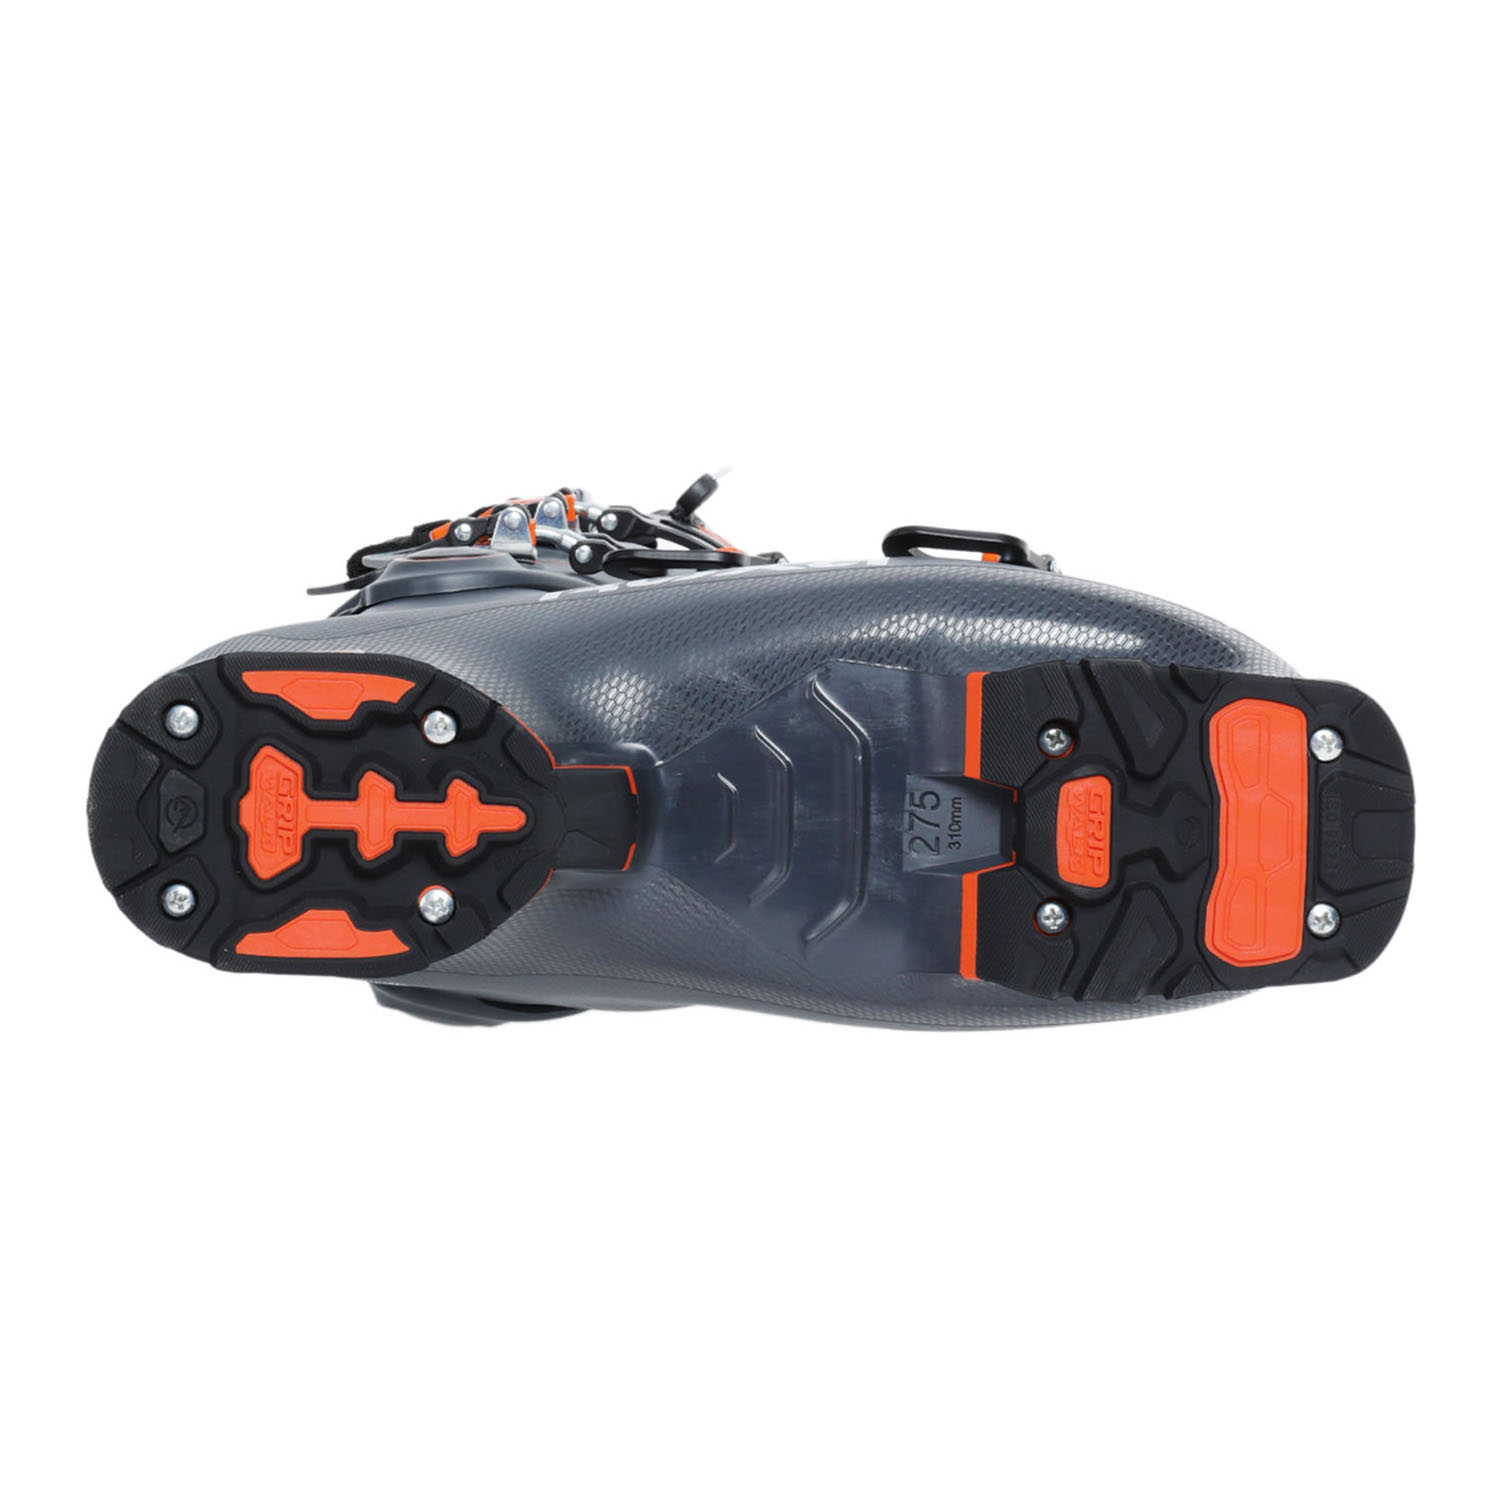 Горнолыжные ботинки ROXA Rfit 130 I.R. ANTHRACITE/BLACK